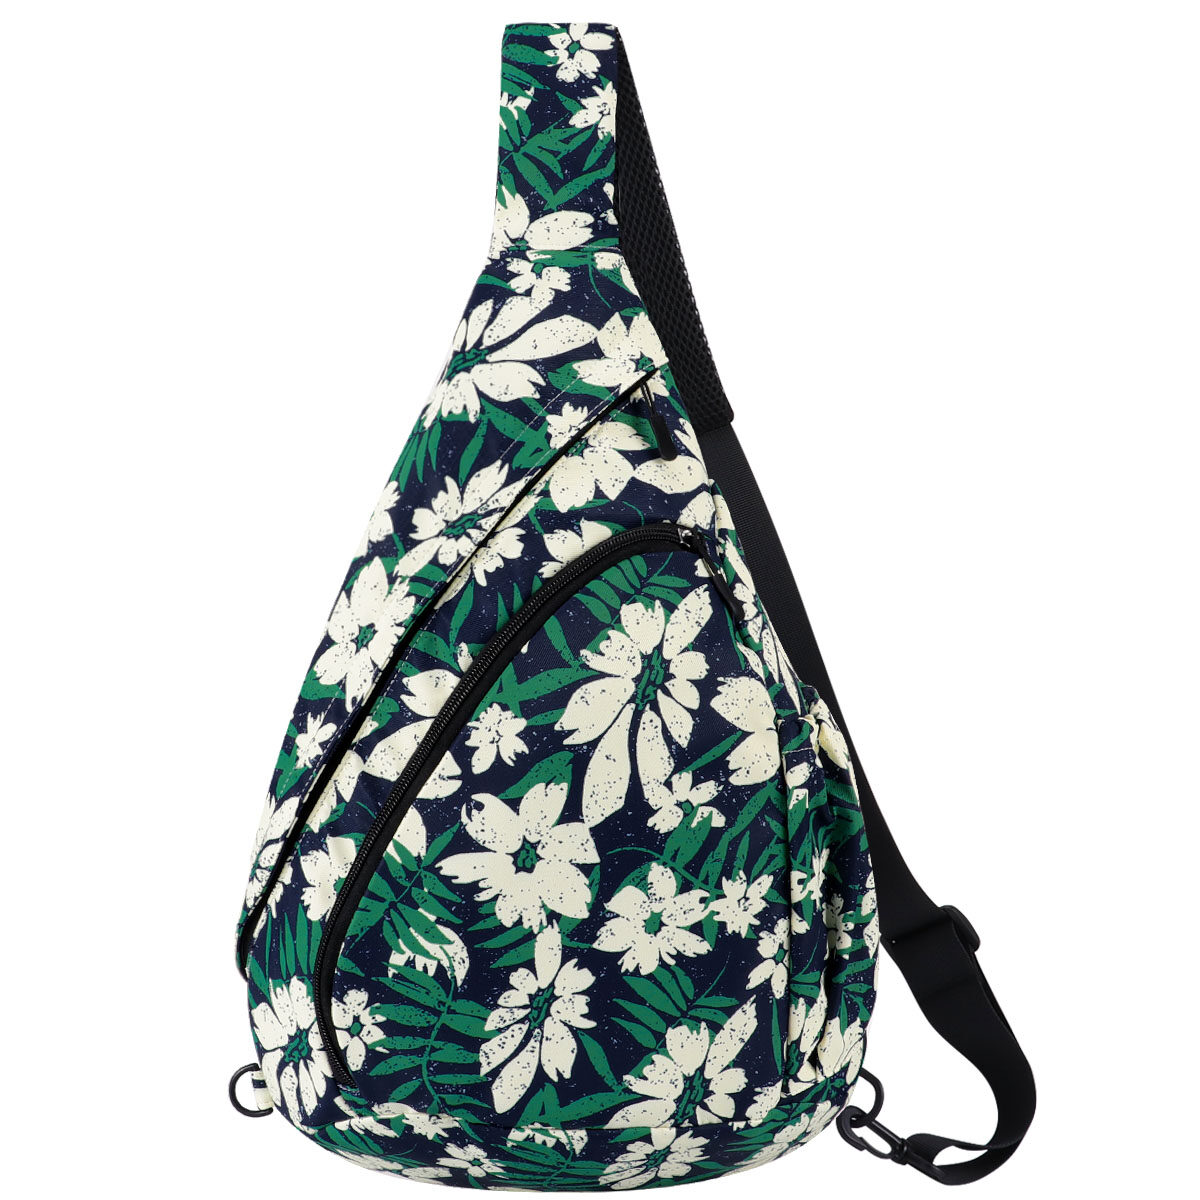 KAWELL Sling Bag Crossbody Shoulder Triangle Packs Messenger Bag Travel Backpack Bag For Men Women College Teen Girls Boys - image 1 of 7